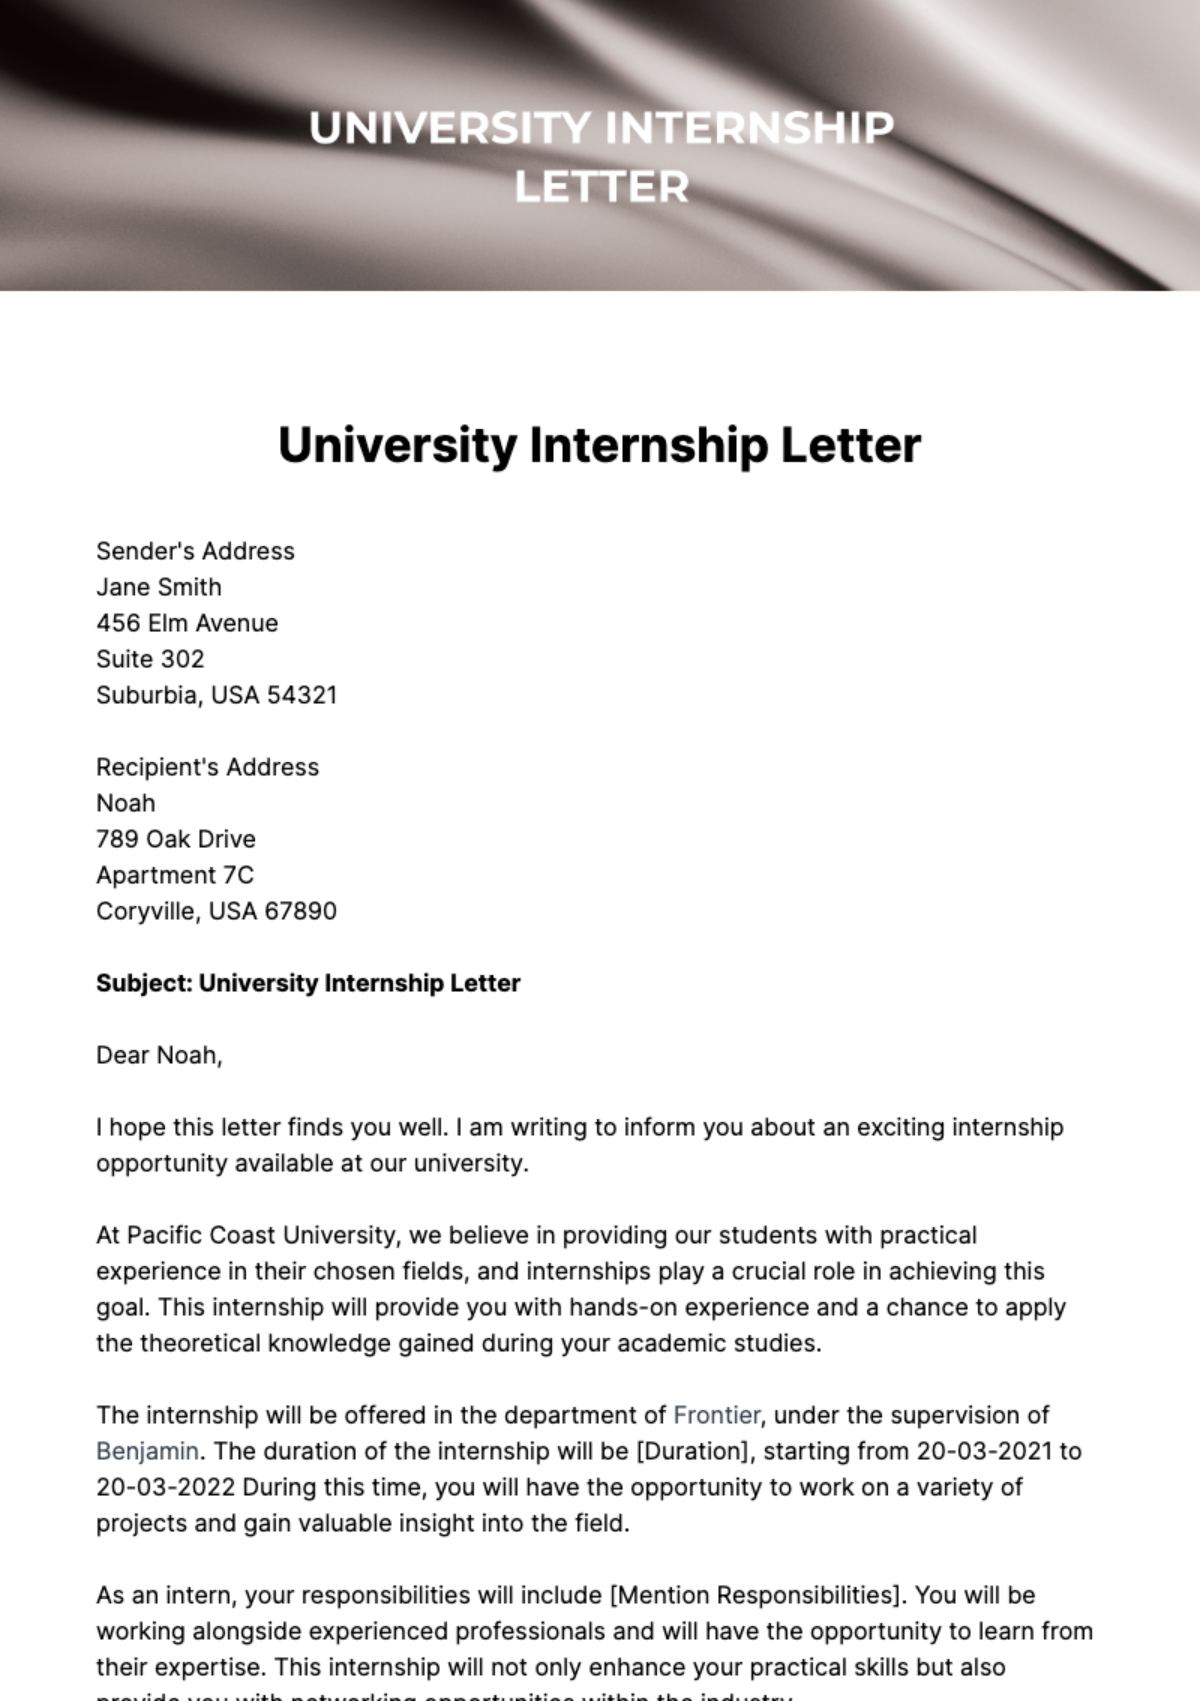 University Internship Letter Template